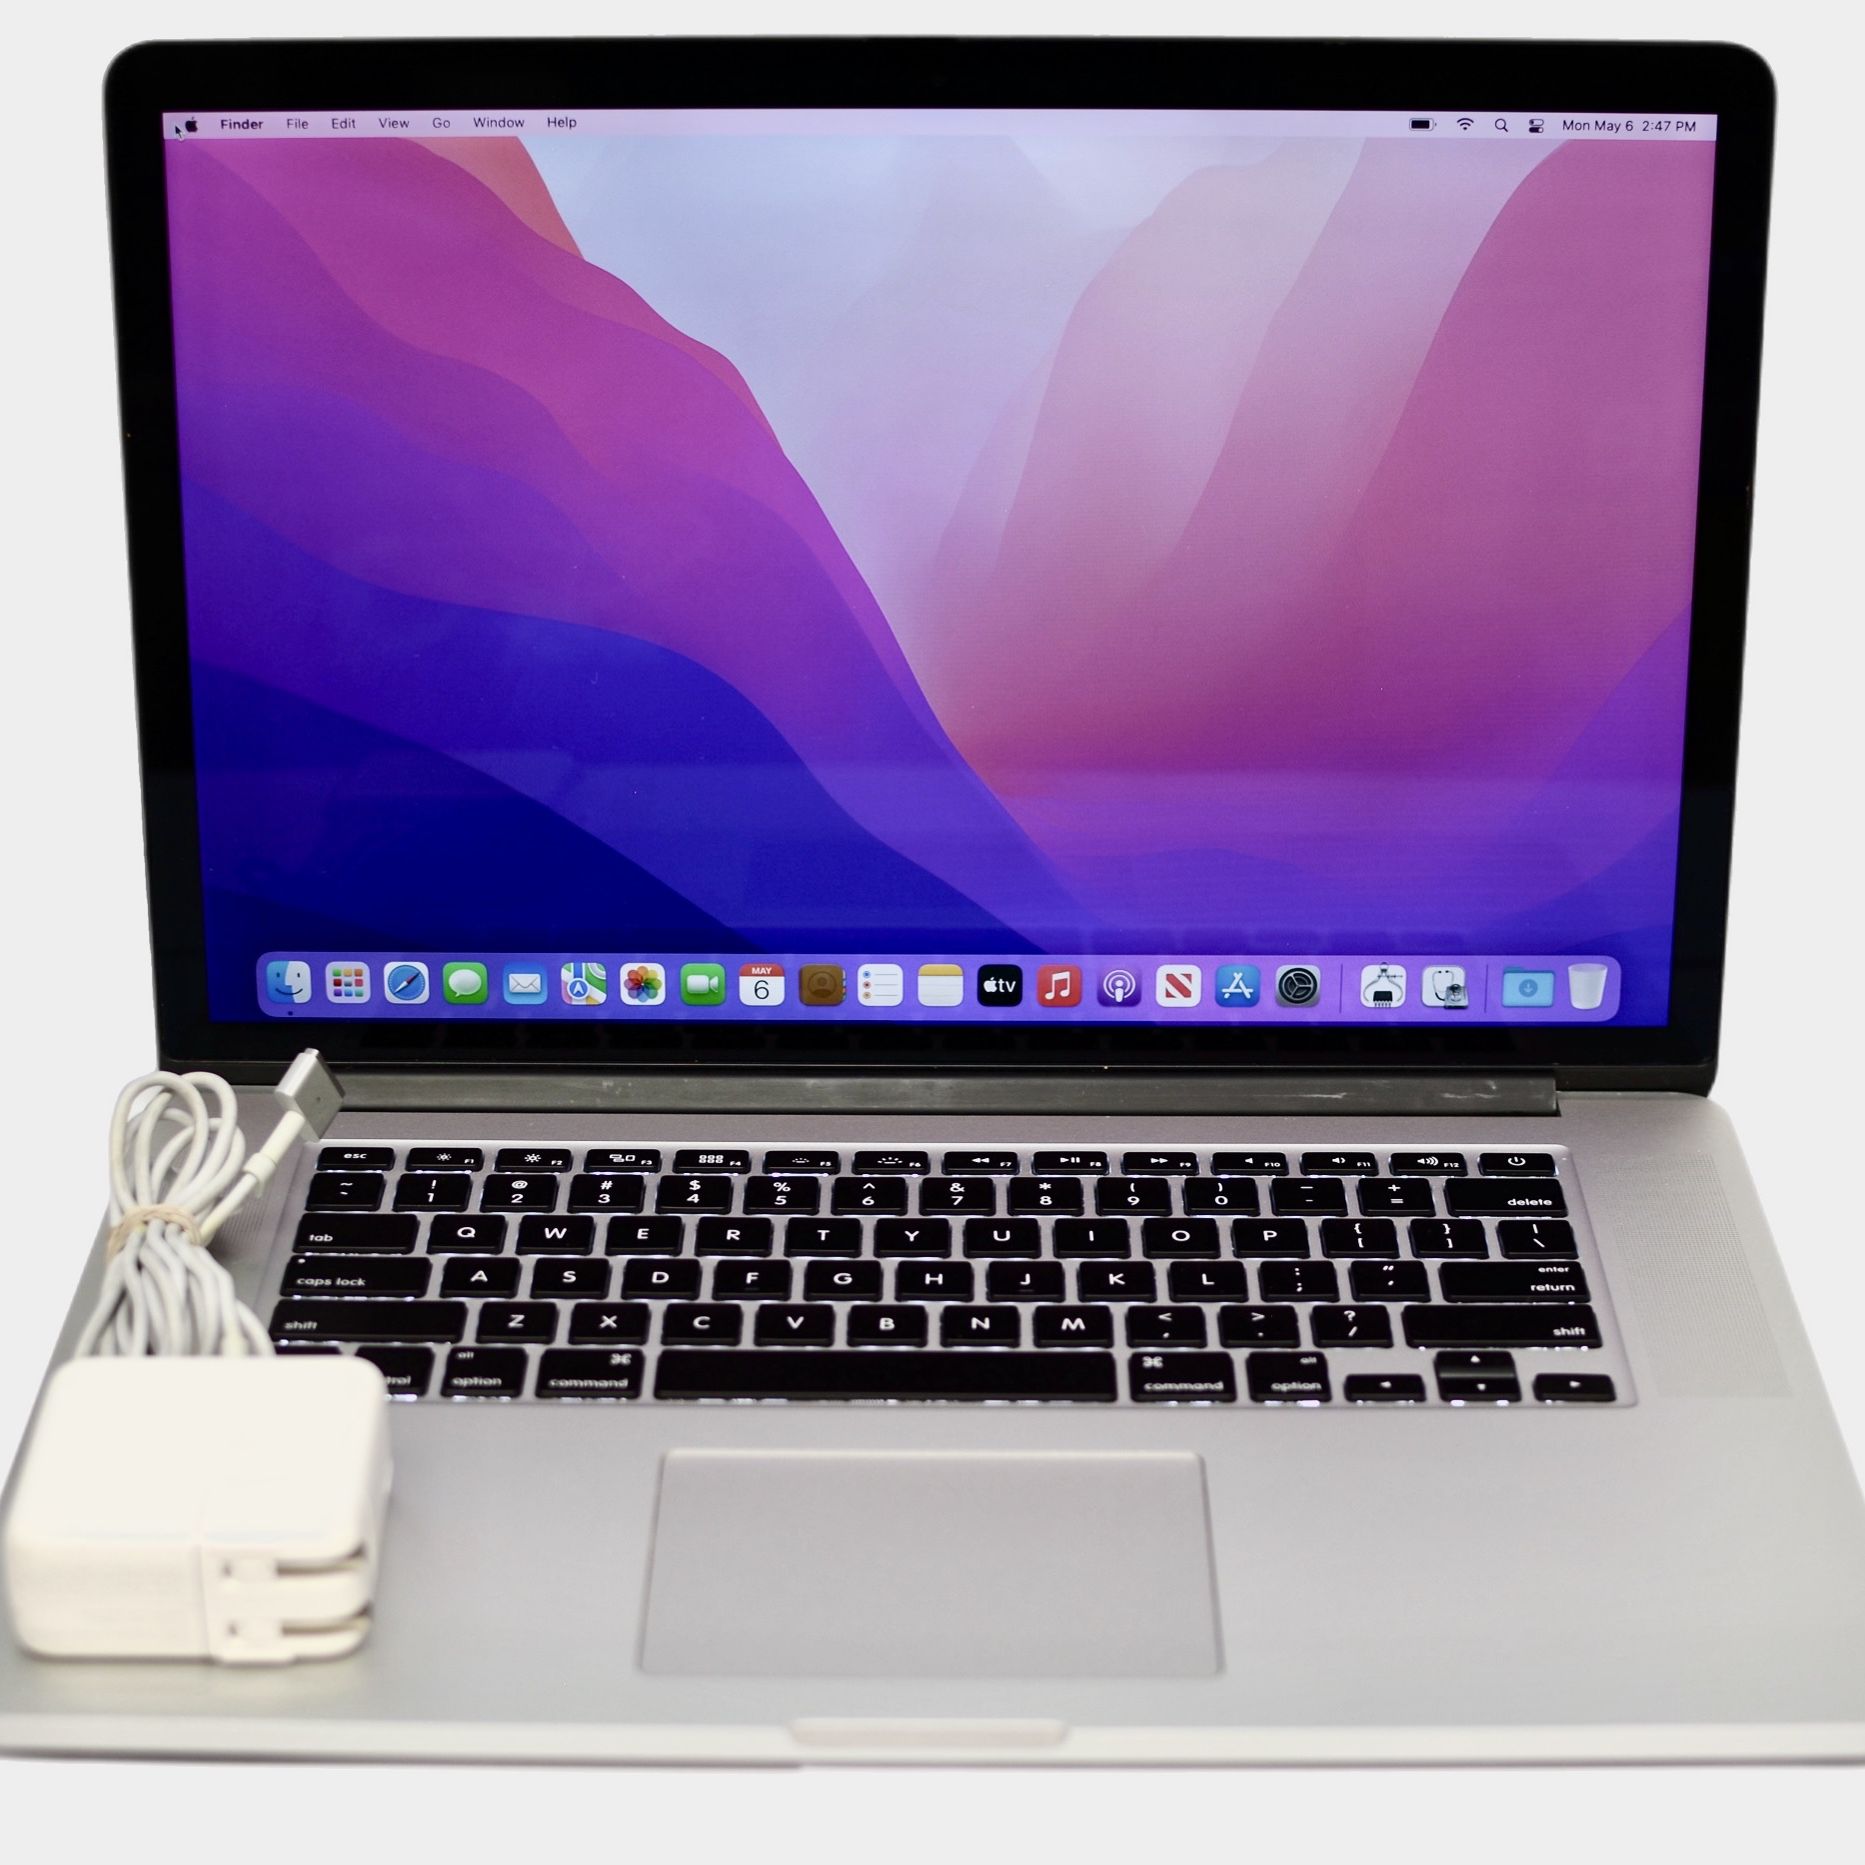 15" Apple MacBook Pro Retina 2.2GHz Intel Core i7 16GB RAM 256GB SSD 2015 - Good Laptop 